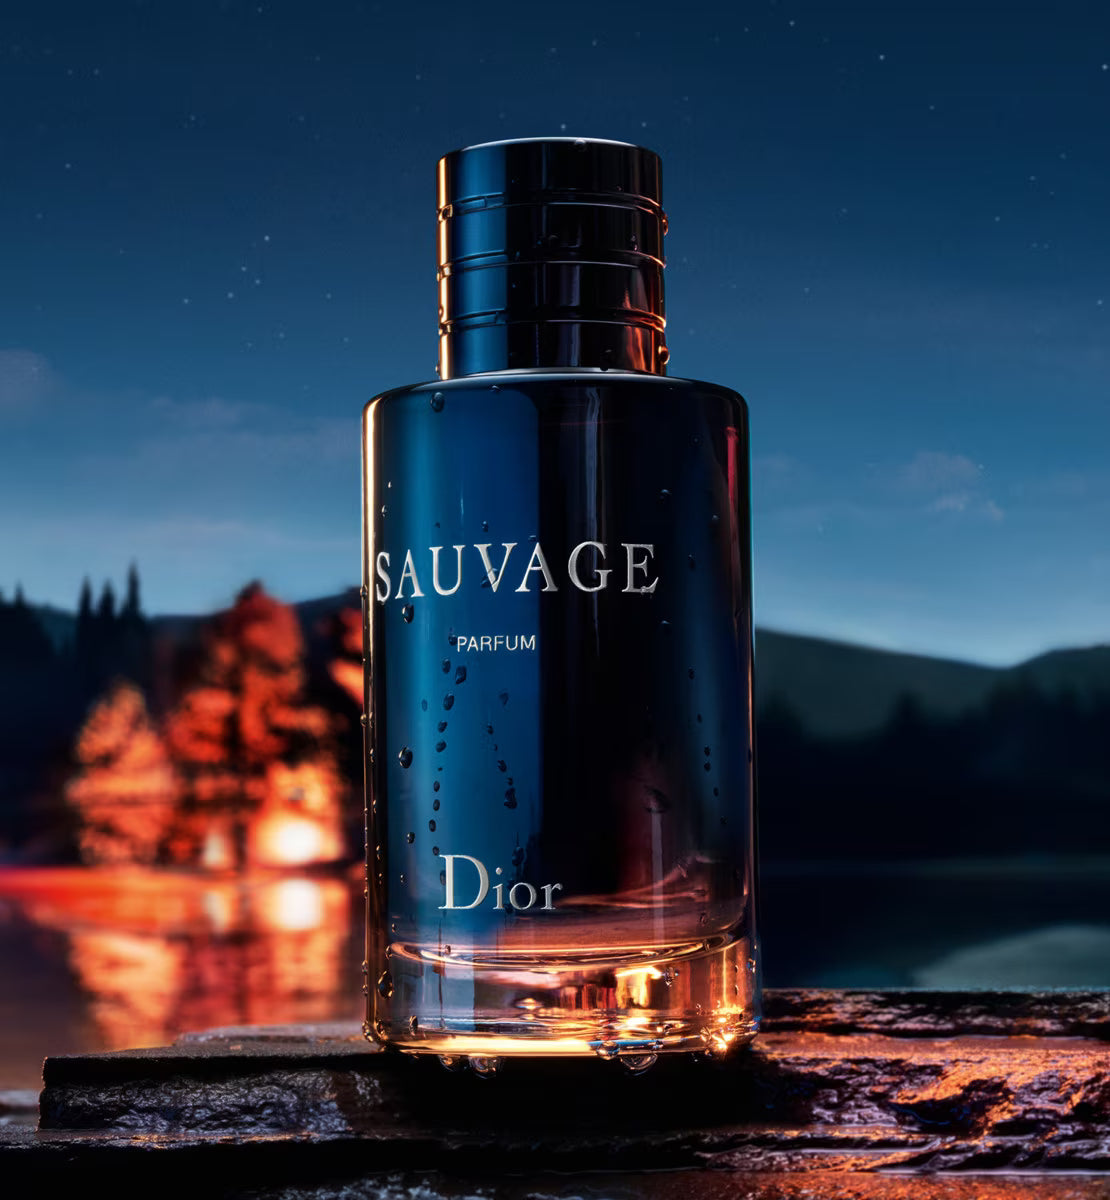 Dior Sauvage香精 － 蘊含辛辣、柑橘、皮革香氣，時尚男士必選